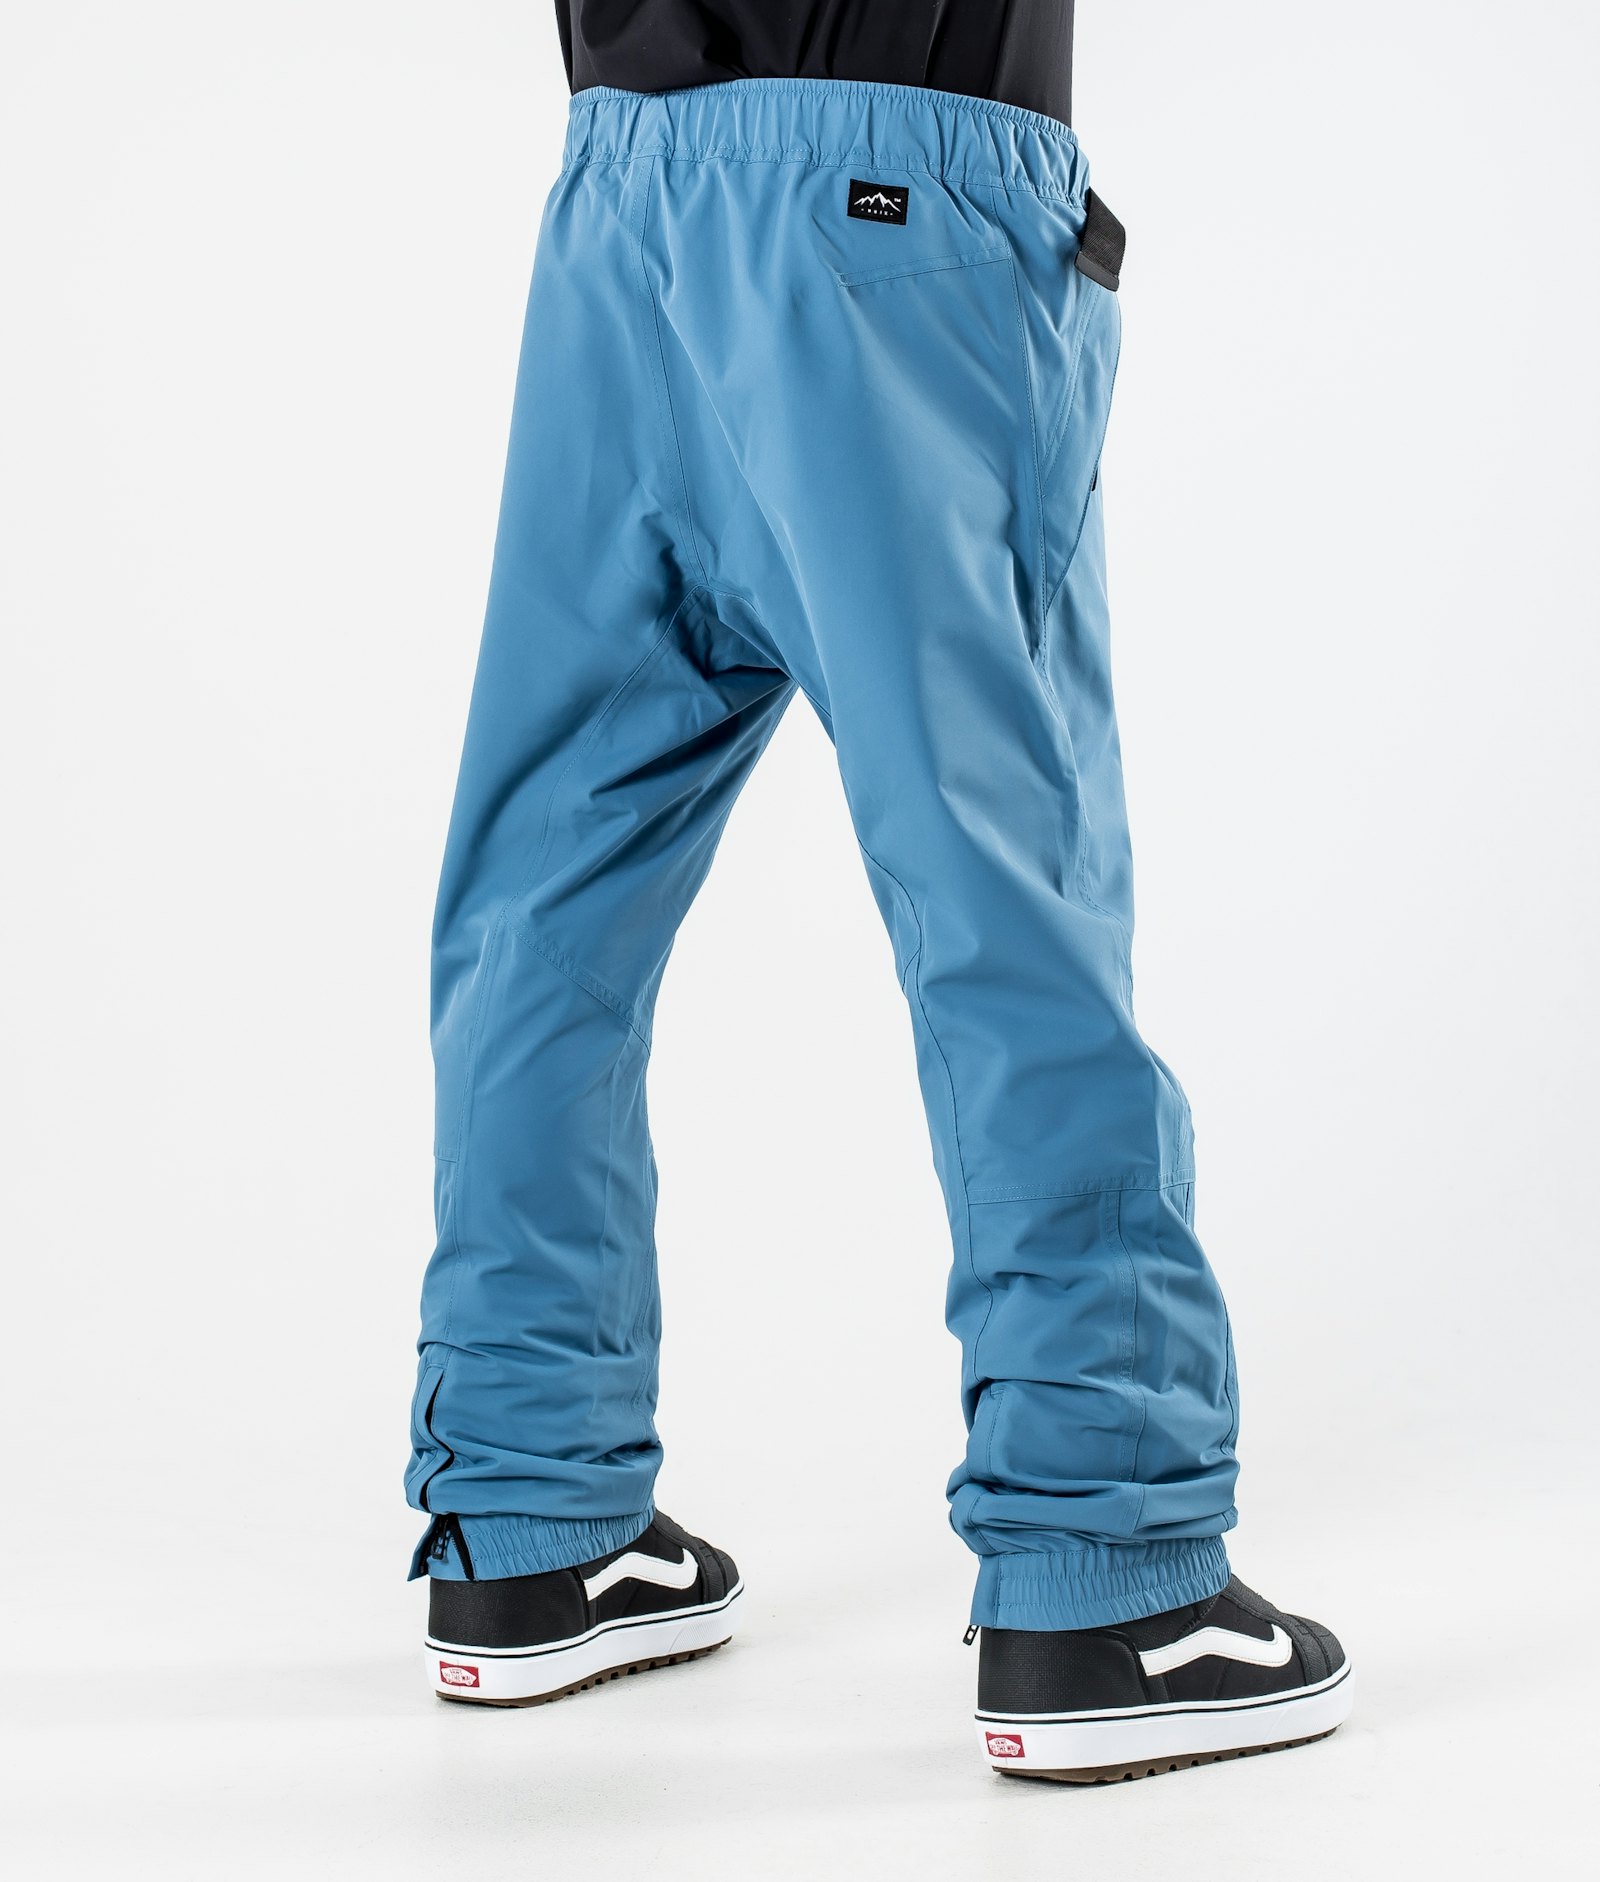 Blizzard 2020 Pantalon de Snowboard Homme Blue Steel